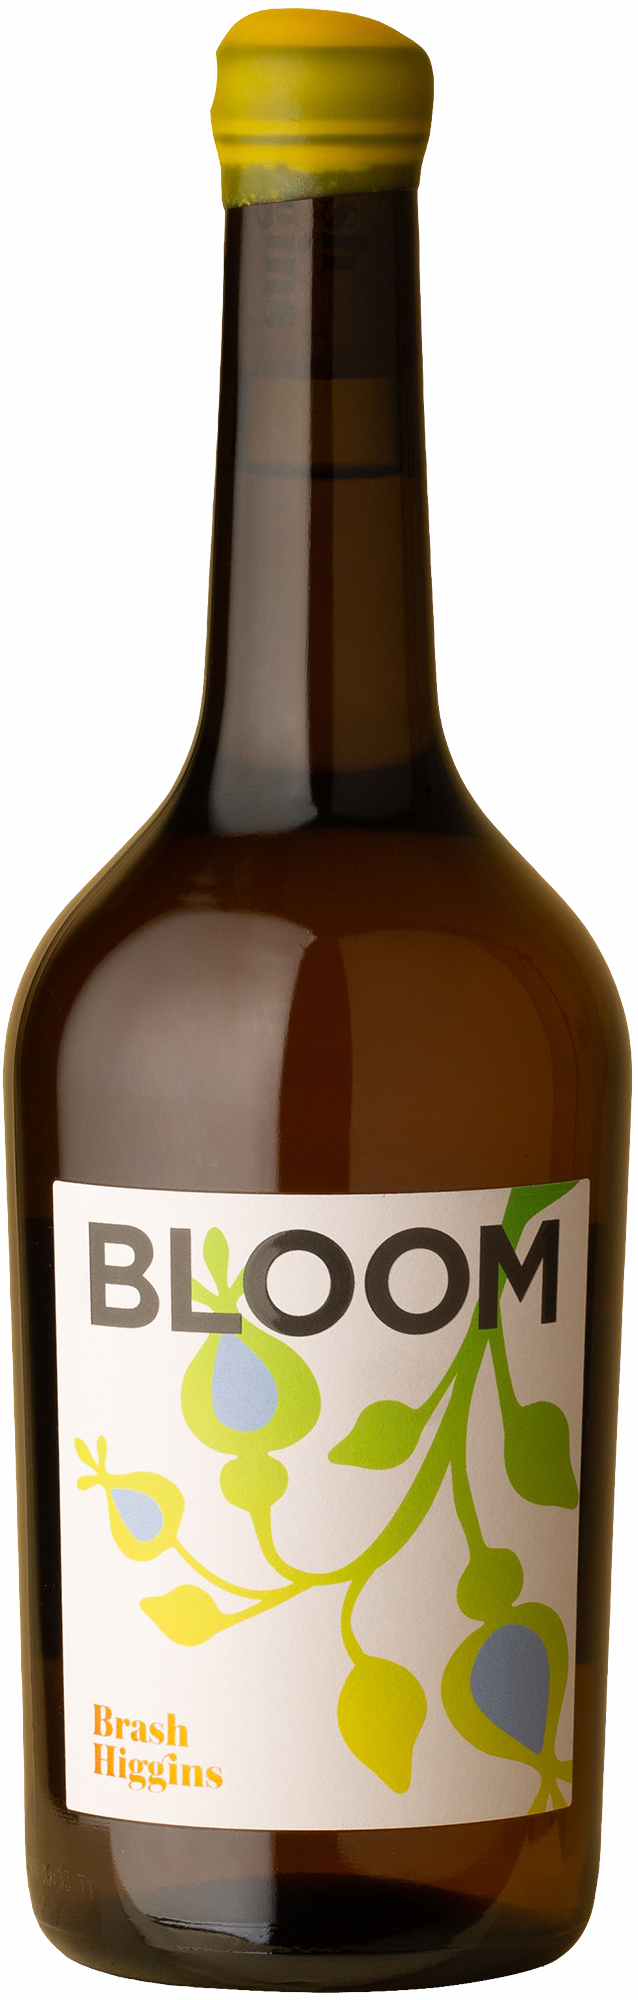 Brash Higgins - Bloom Chardonnay 2015 White Wine